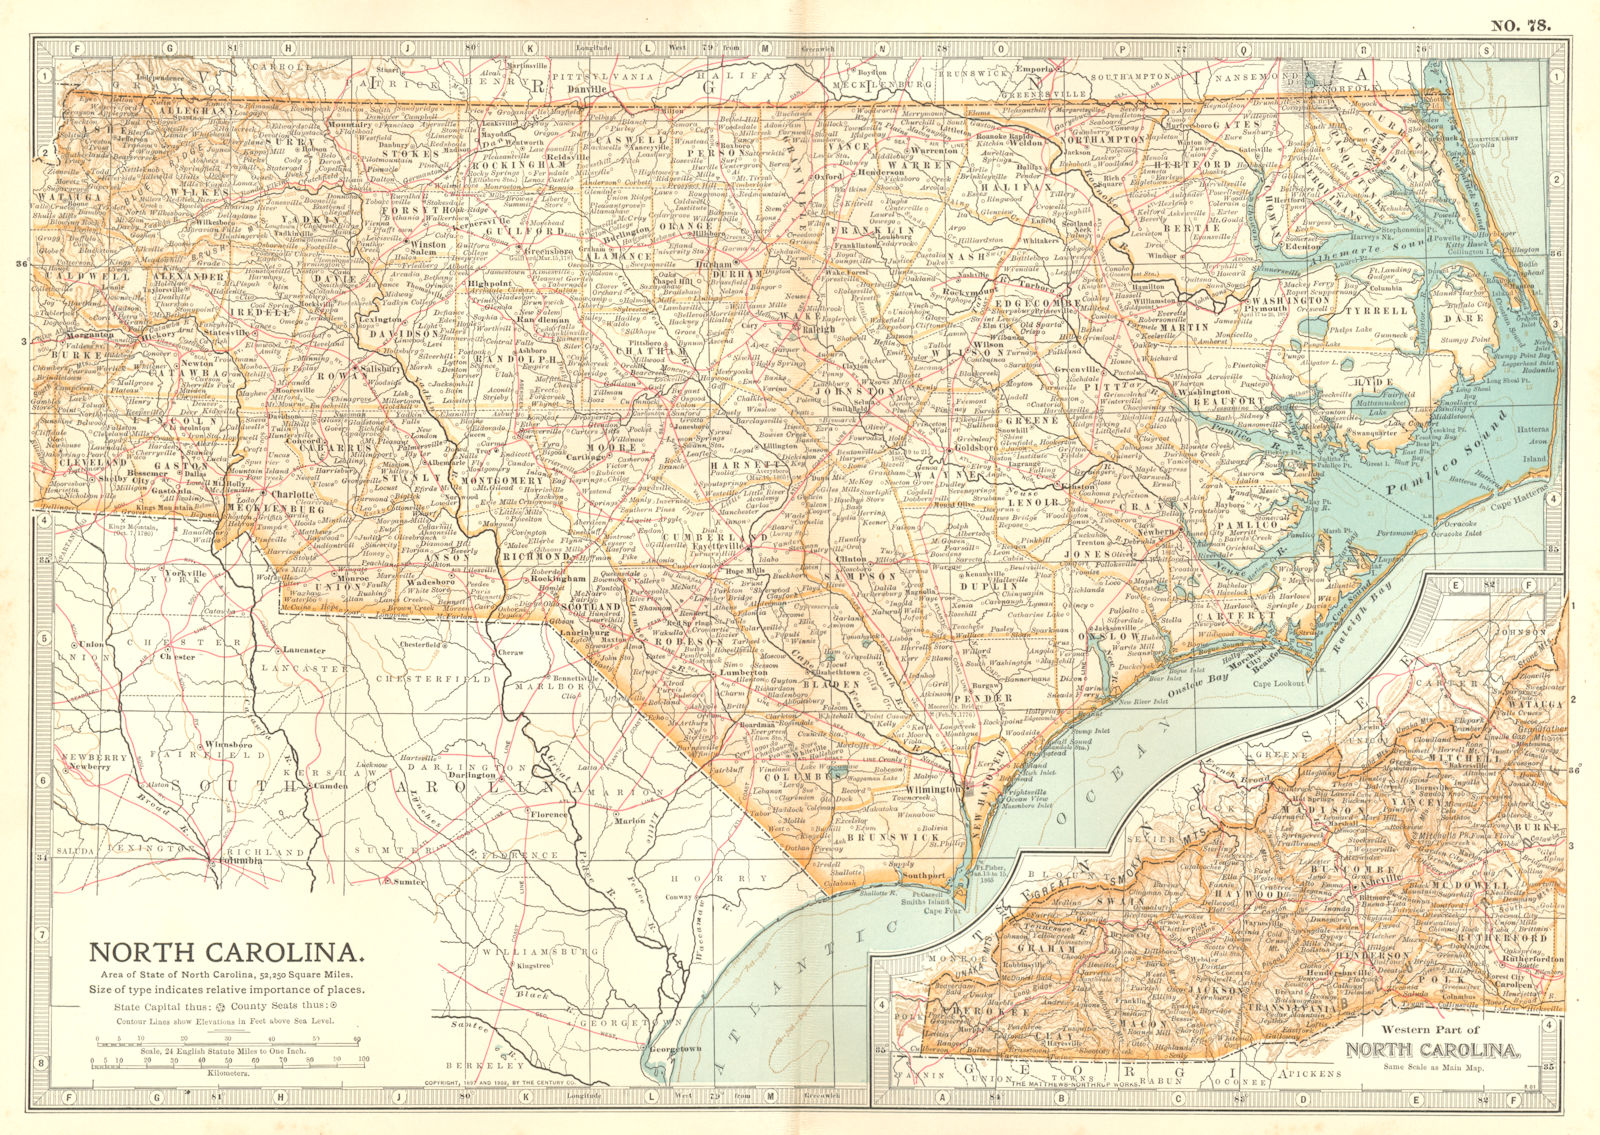 NORTH CAROLINA. State map. Shows revolutionary & civil war battlefields 1903